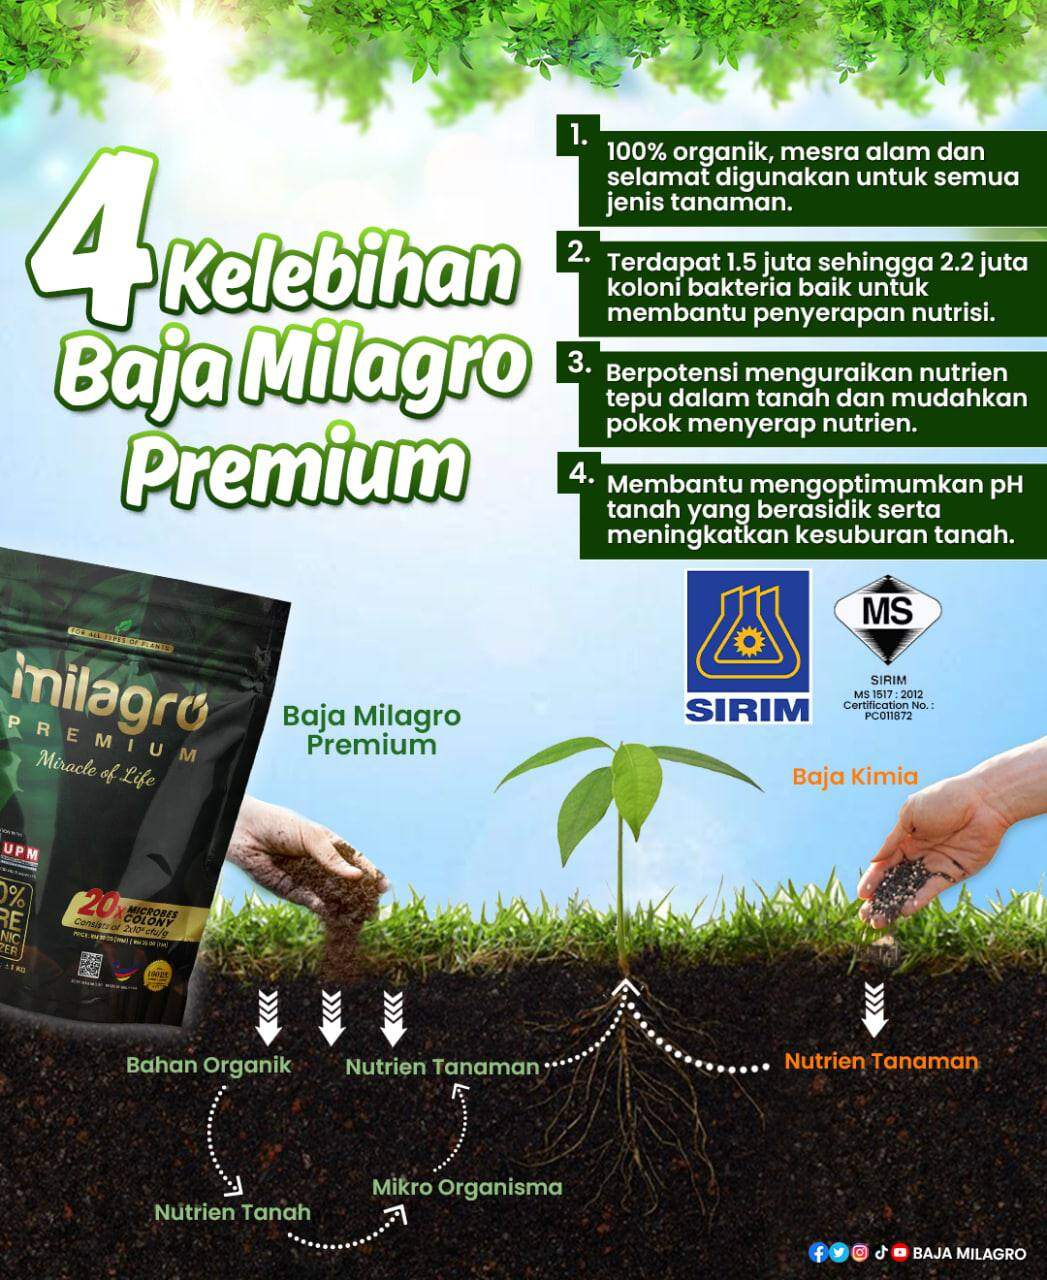 MILAGRO PREMIUM - Baja Organik Premium + Free Gift Biji Benih